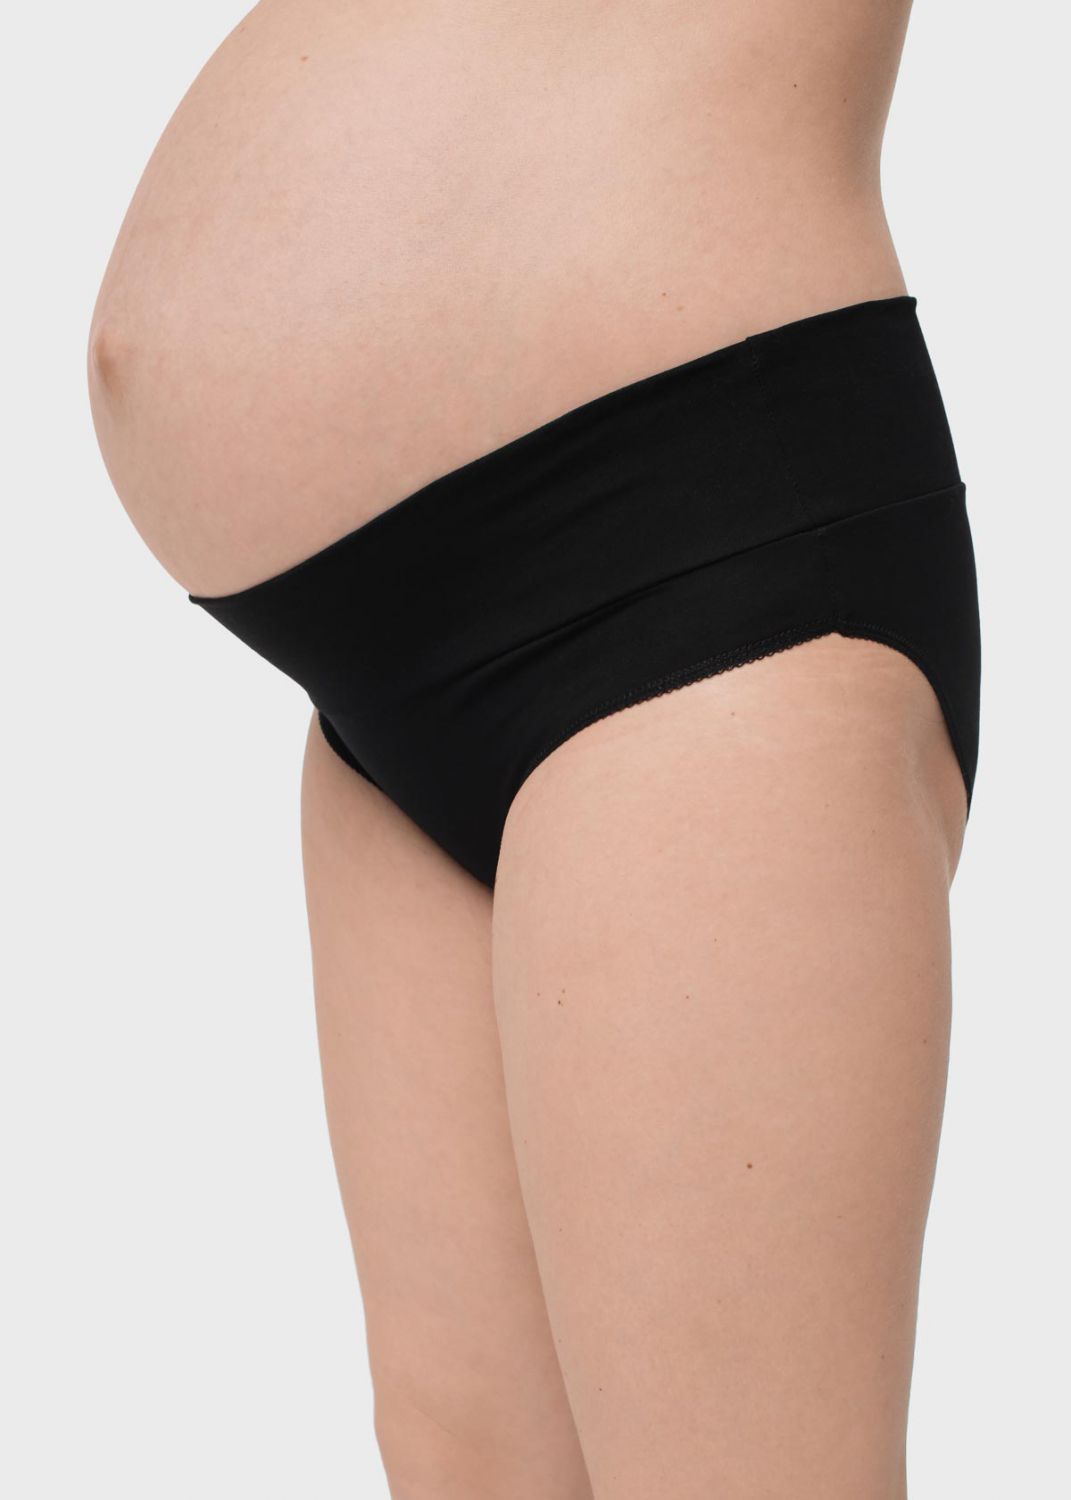 Underpants "Lika" for pregnant women; black